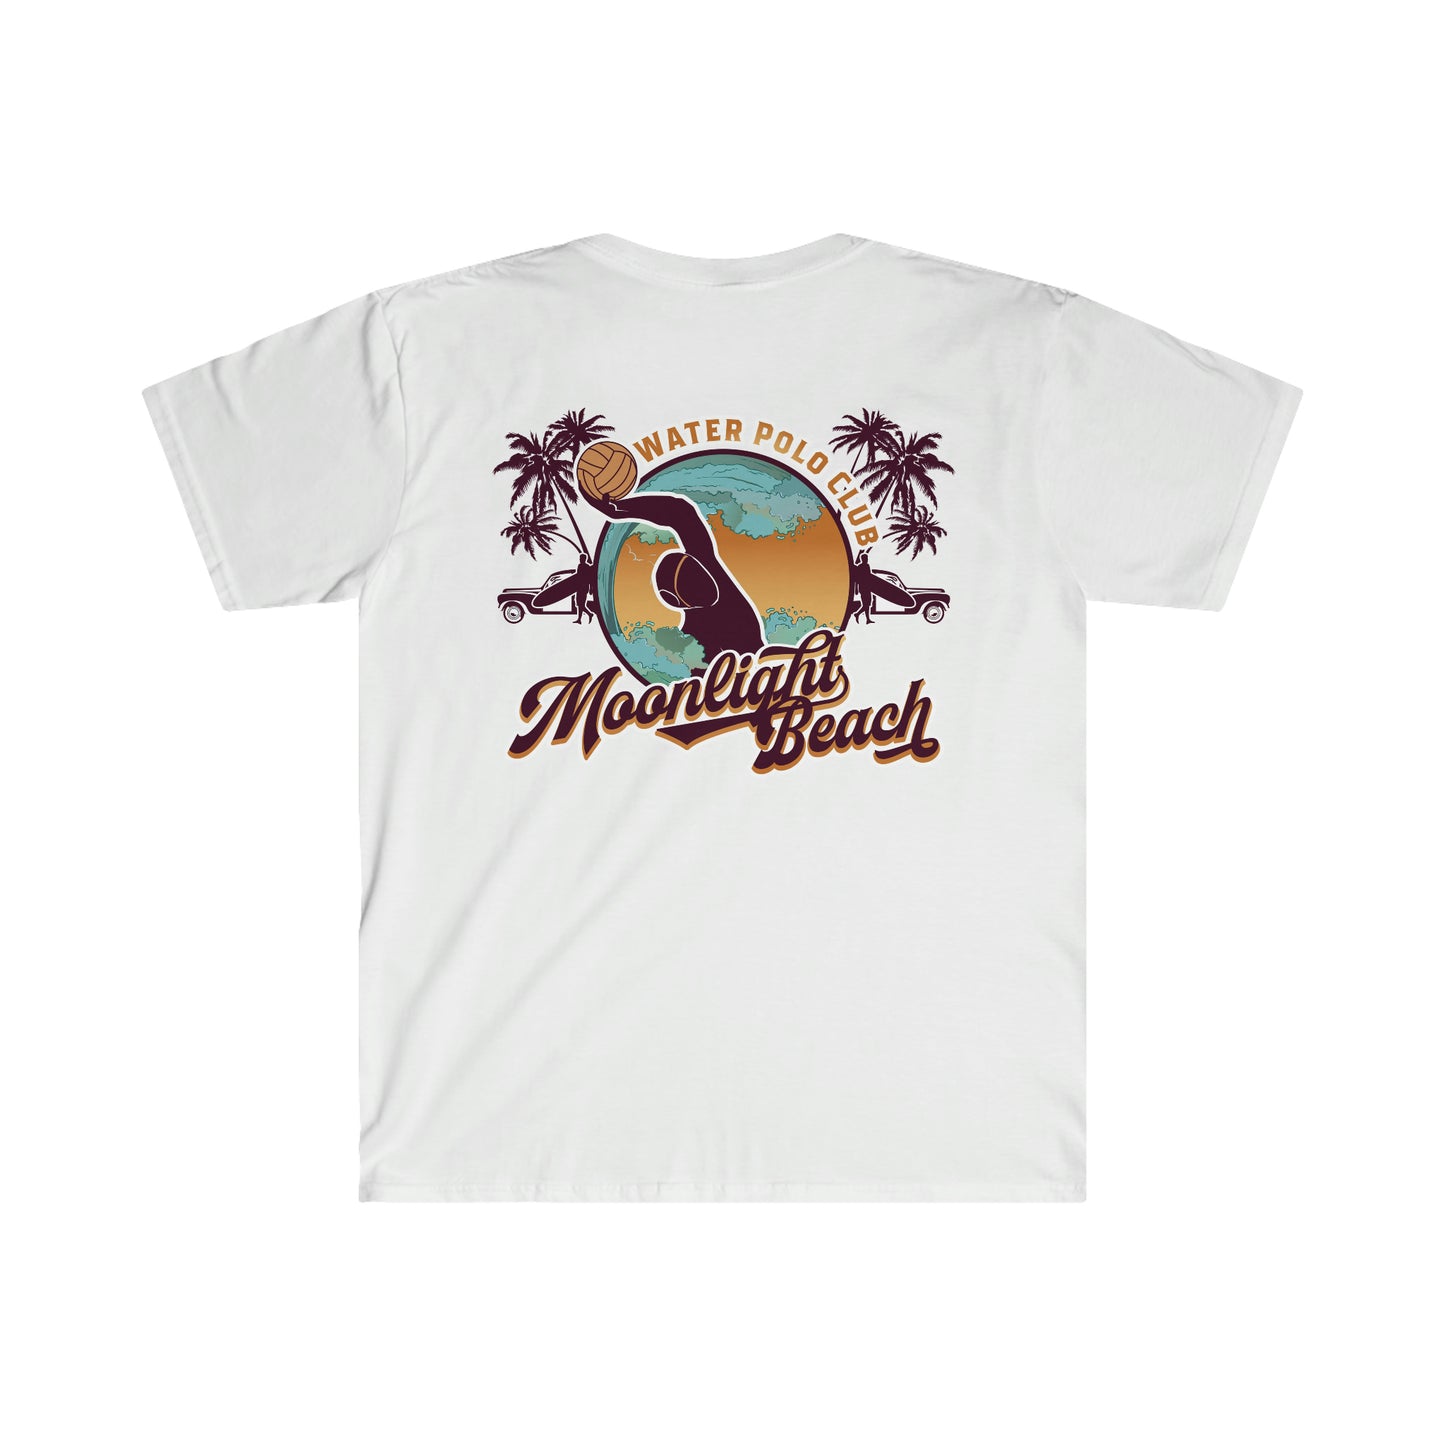 Moonlight Beach WPC Short-Sleeve Unisex GILDAN Club T-Shirt